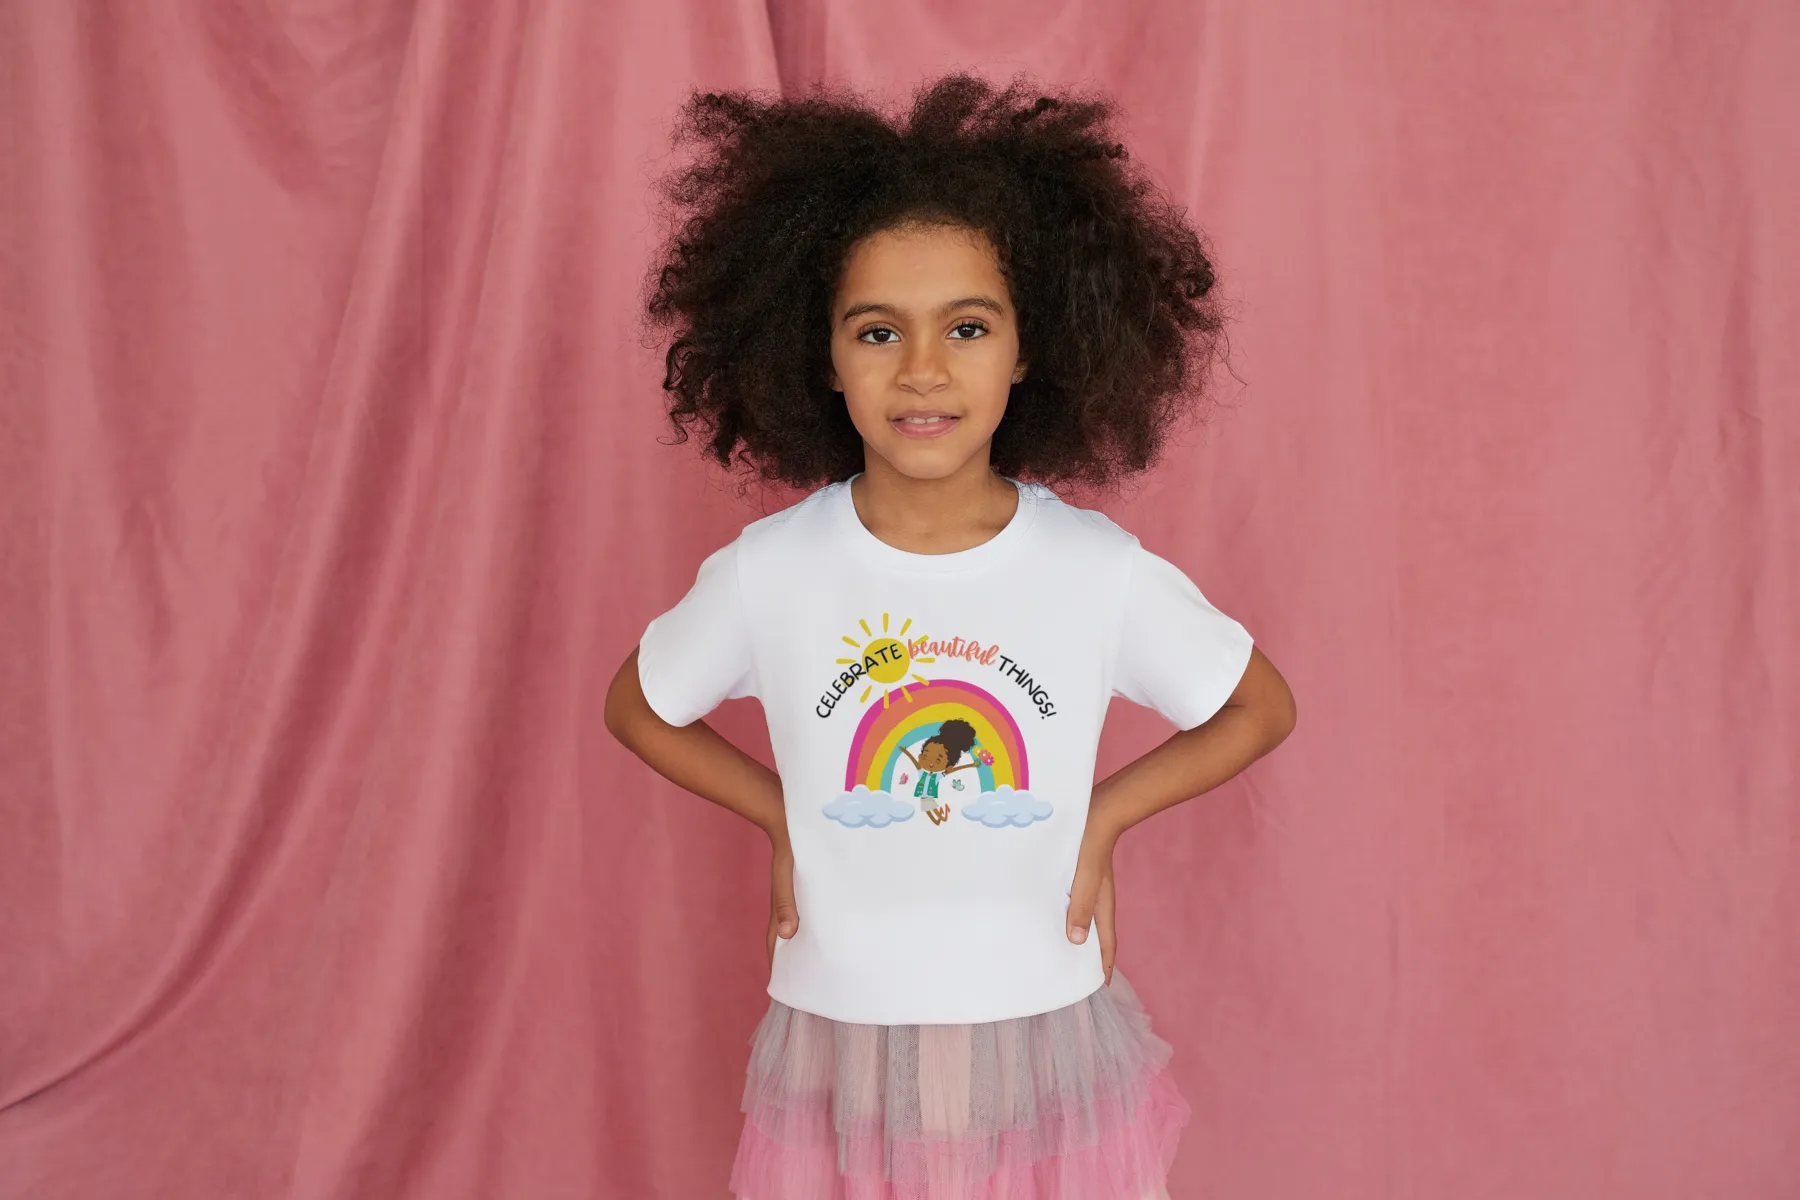 'We Celebrate beautiful things' kids T-shirt